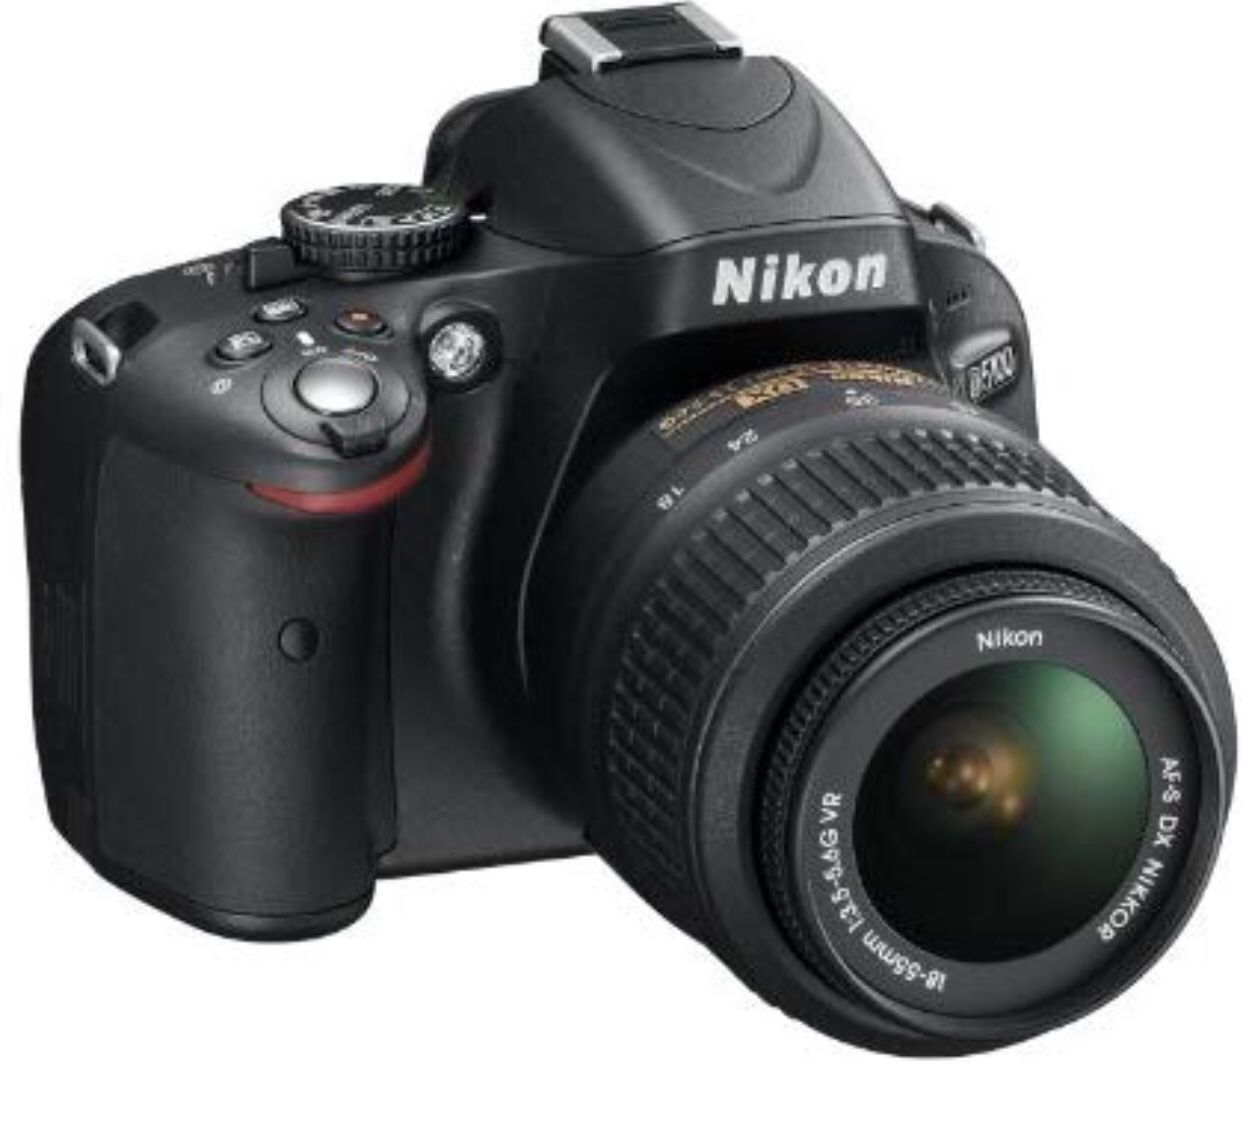 Nikon d5100 with 18-200 vr lense